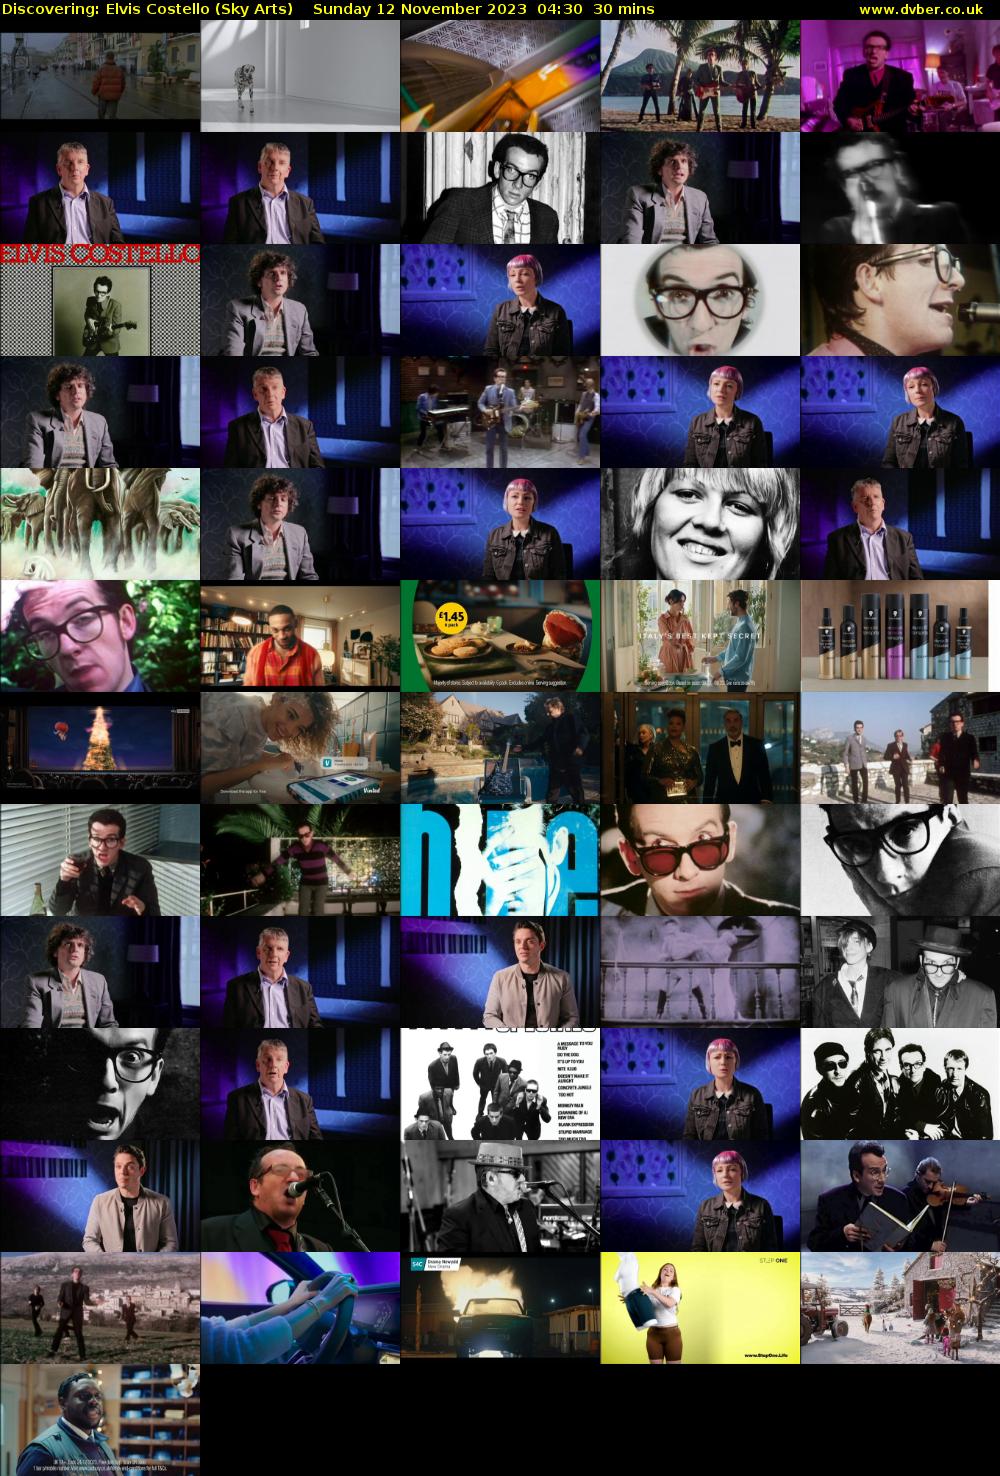 Discovering: Elvis Costello (Sky Arts) Sunday 12 November 2023 04:30 - 05:00